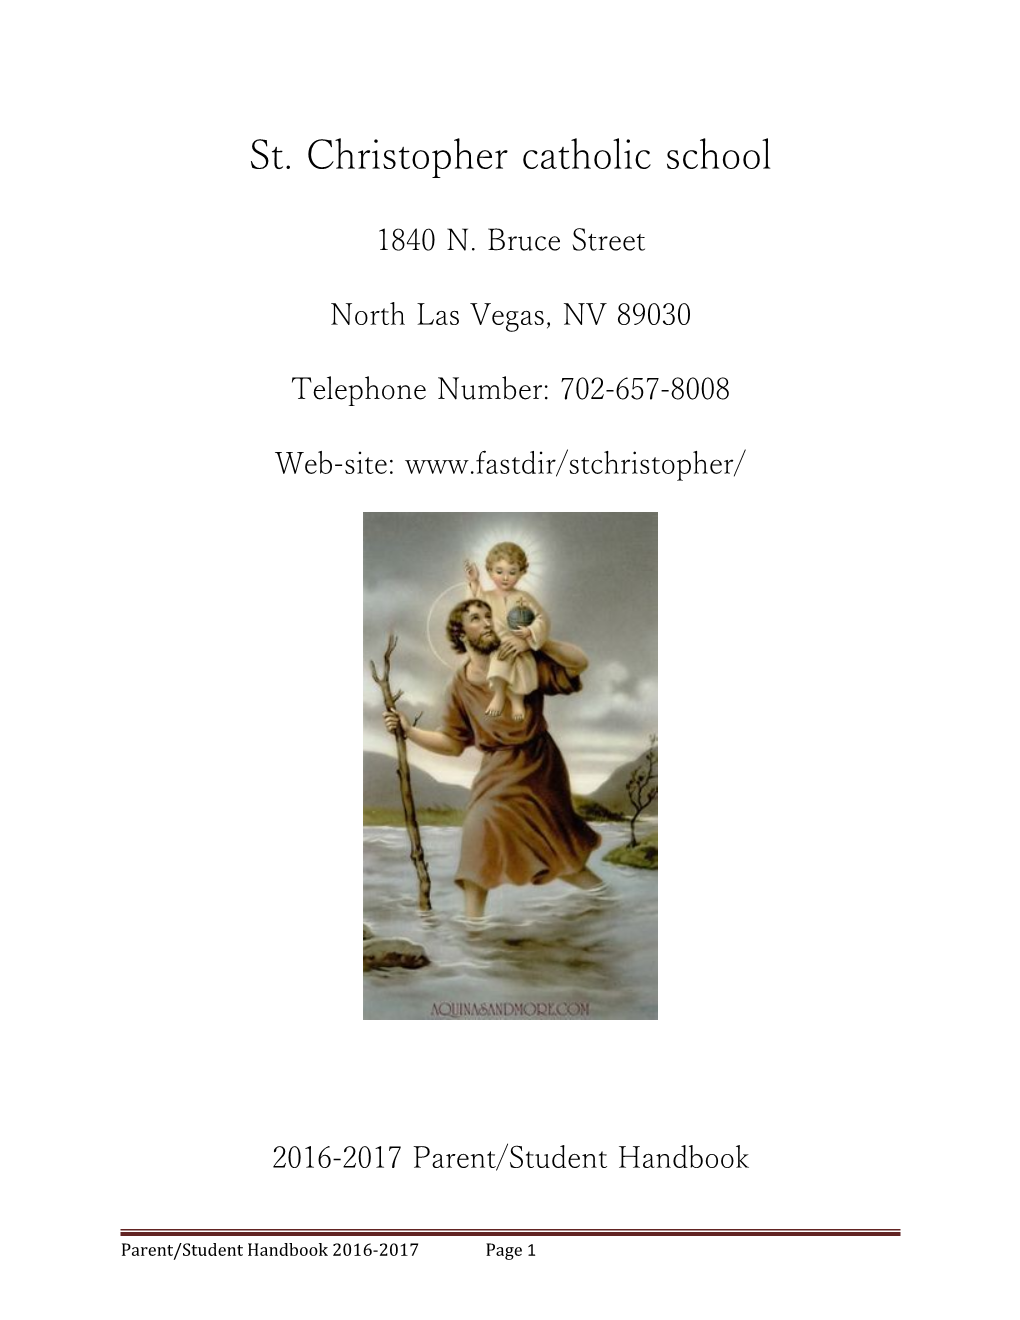 St. Christopher Catholic School